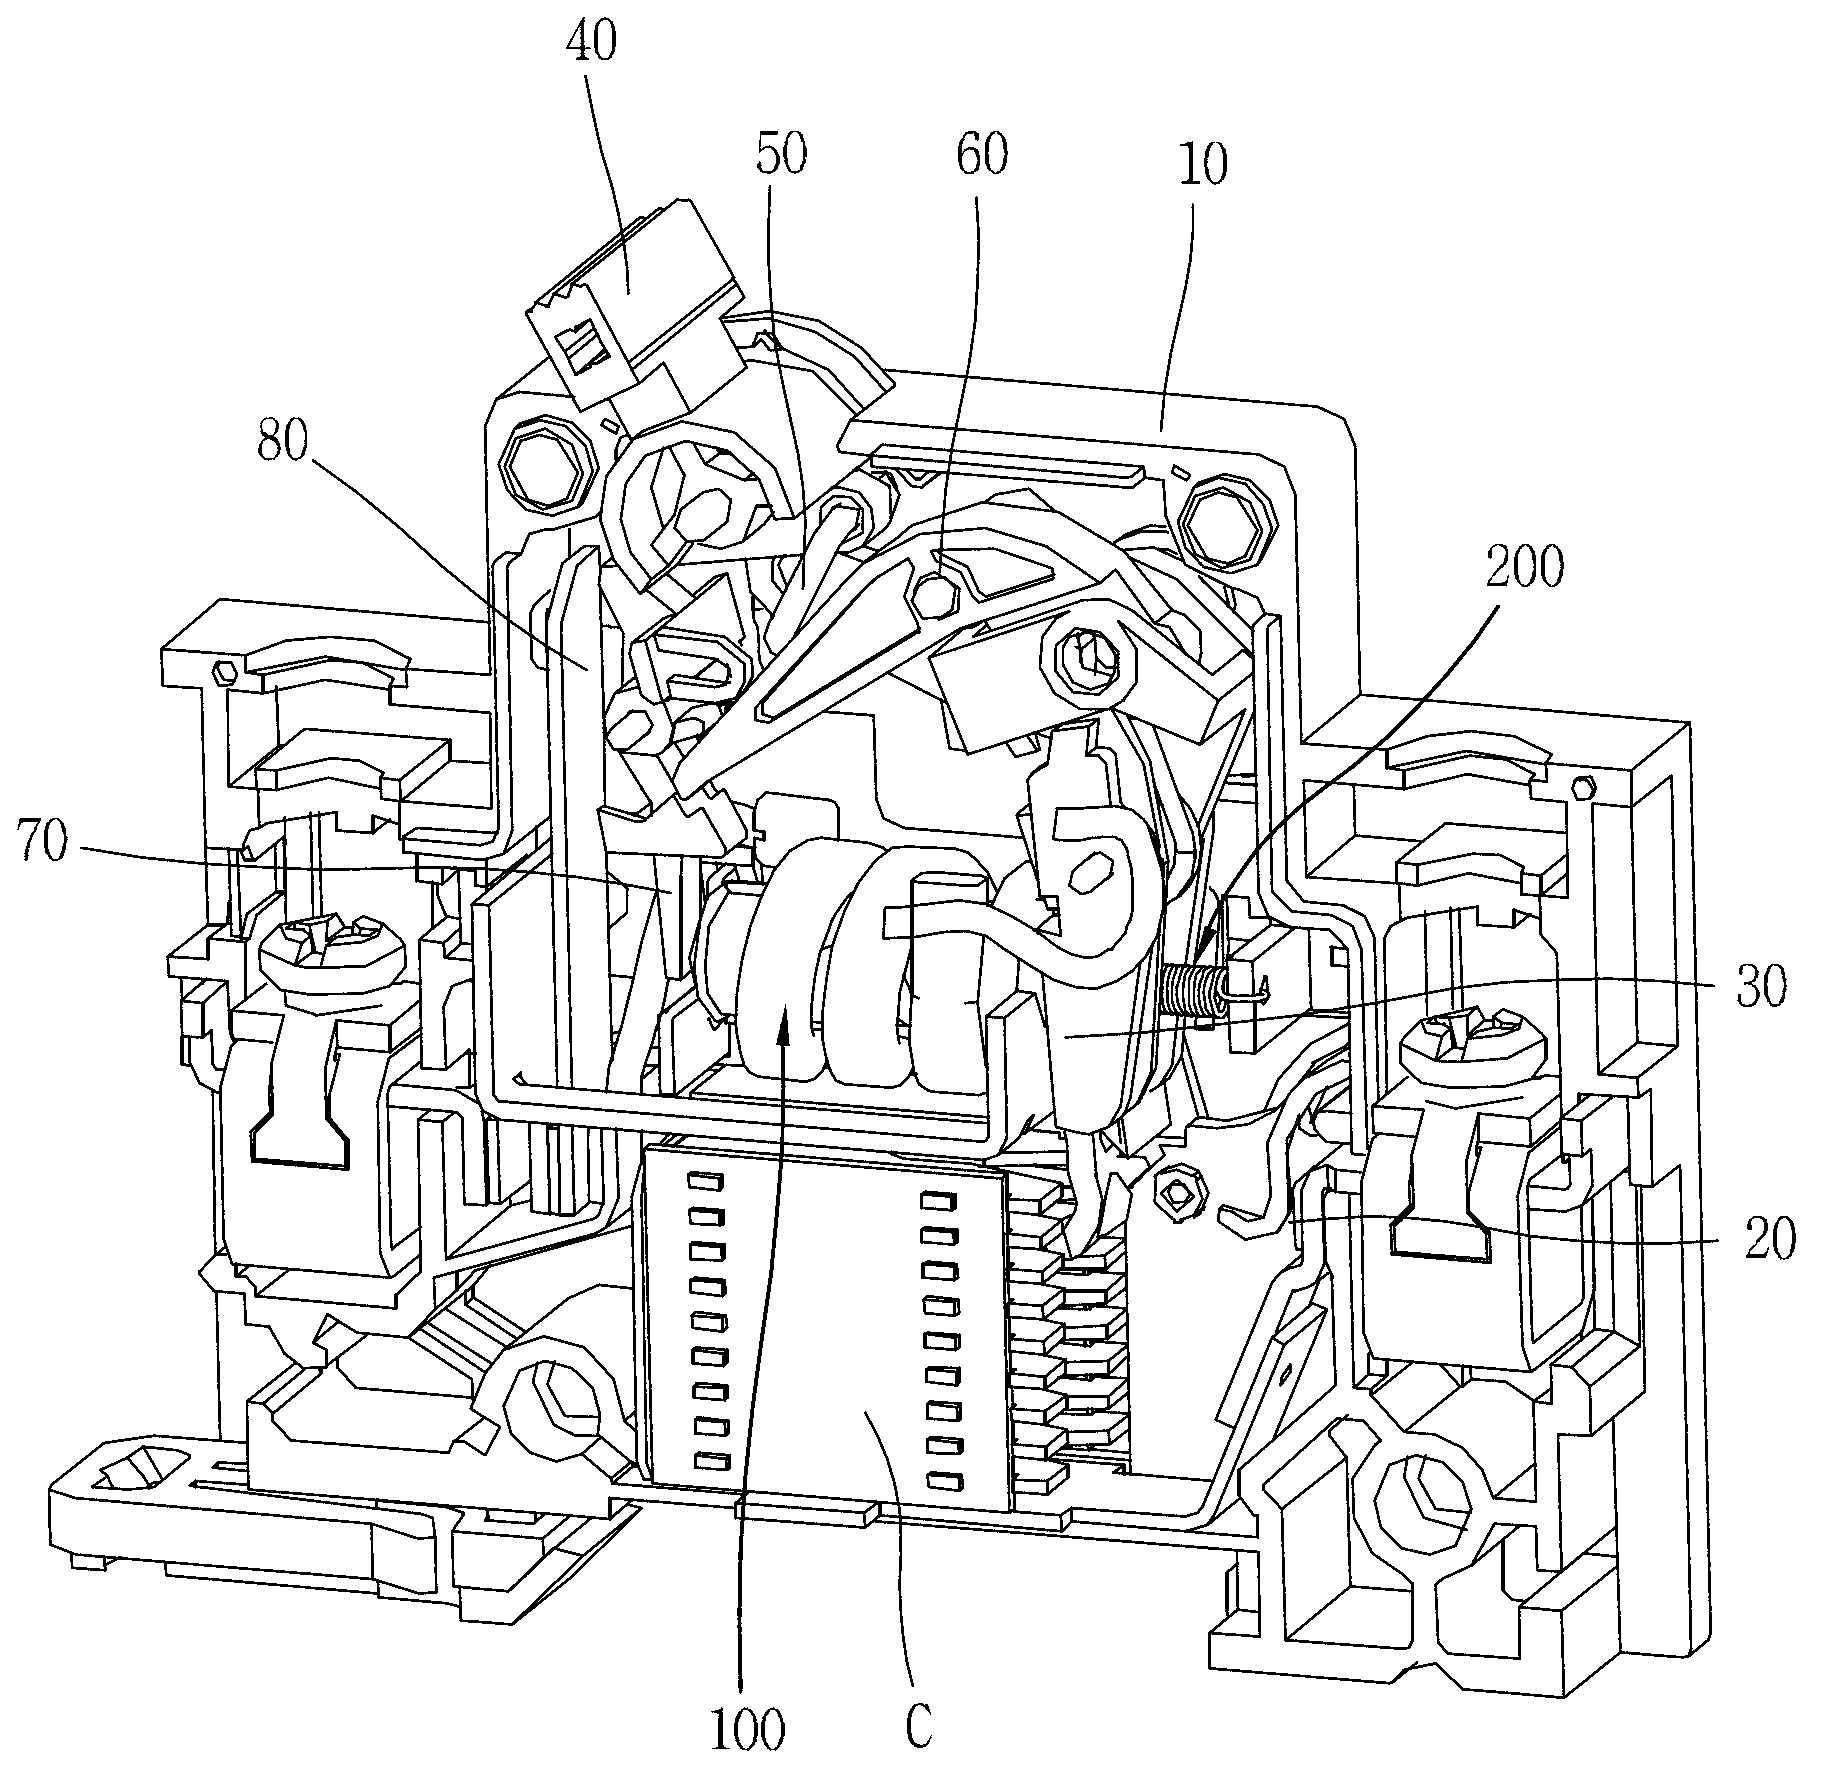 Instant trip mechanism for minitype circuit breaker